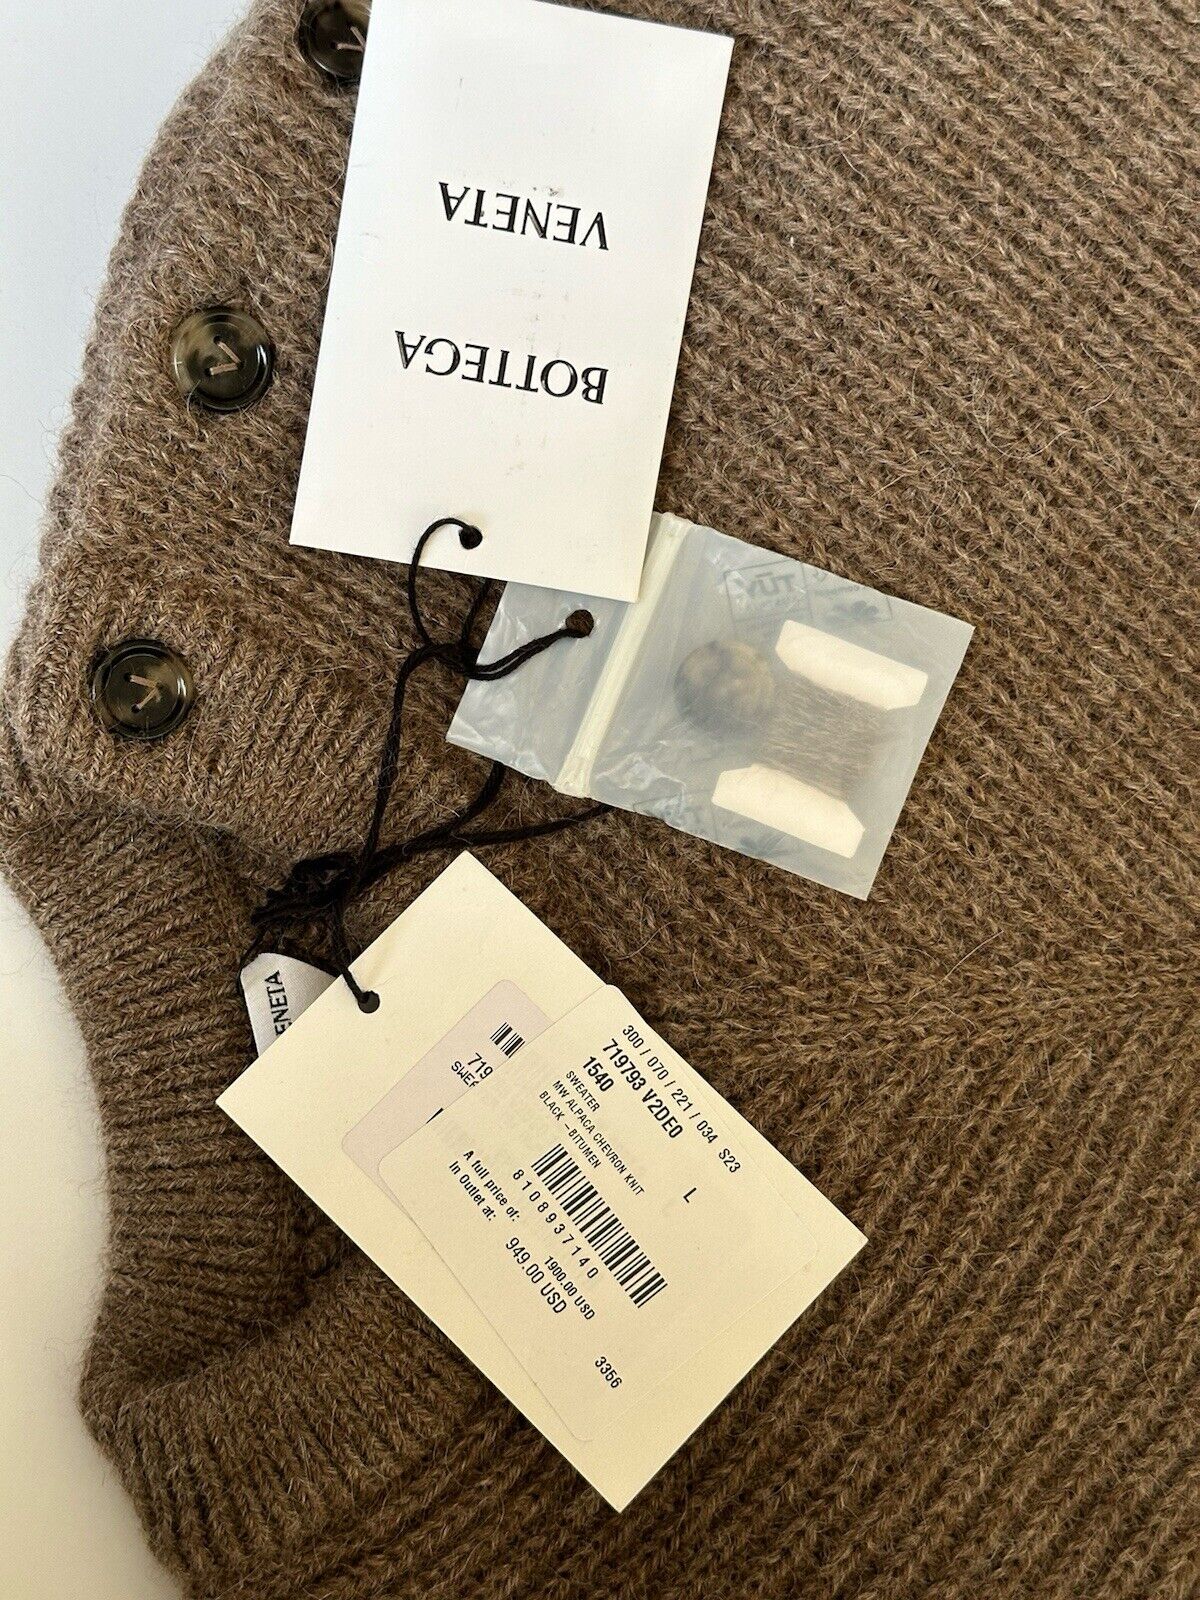 Bottega Veneta Women's Alpaca Chevron Knit Brown Sweater L 719793 IT NWT $1900